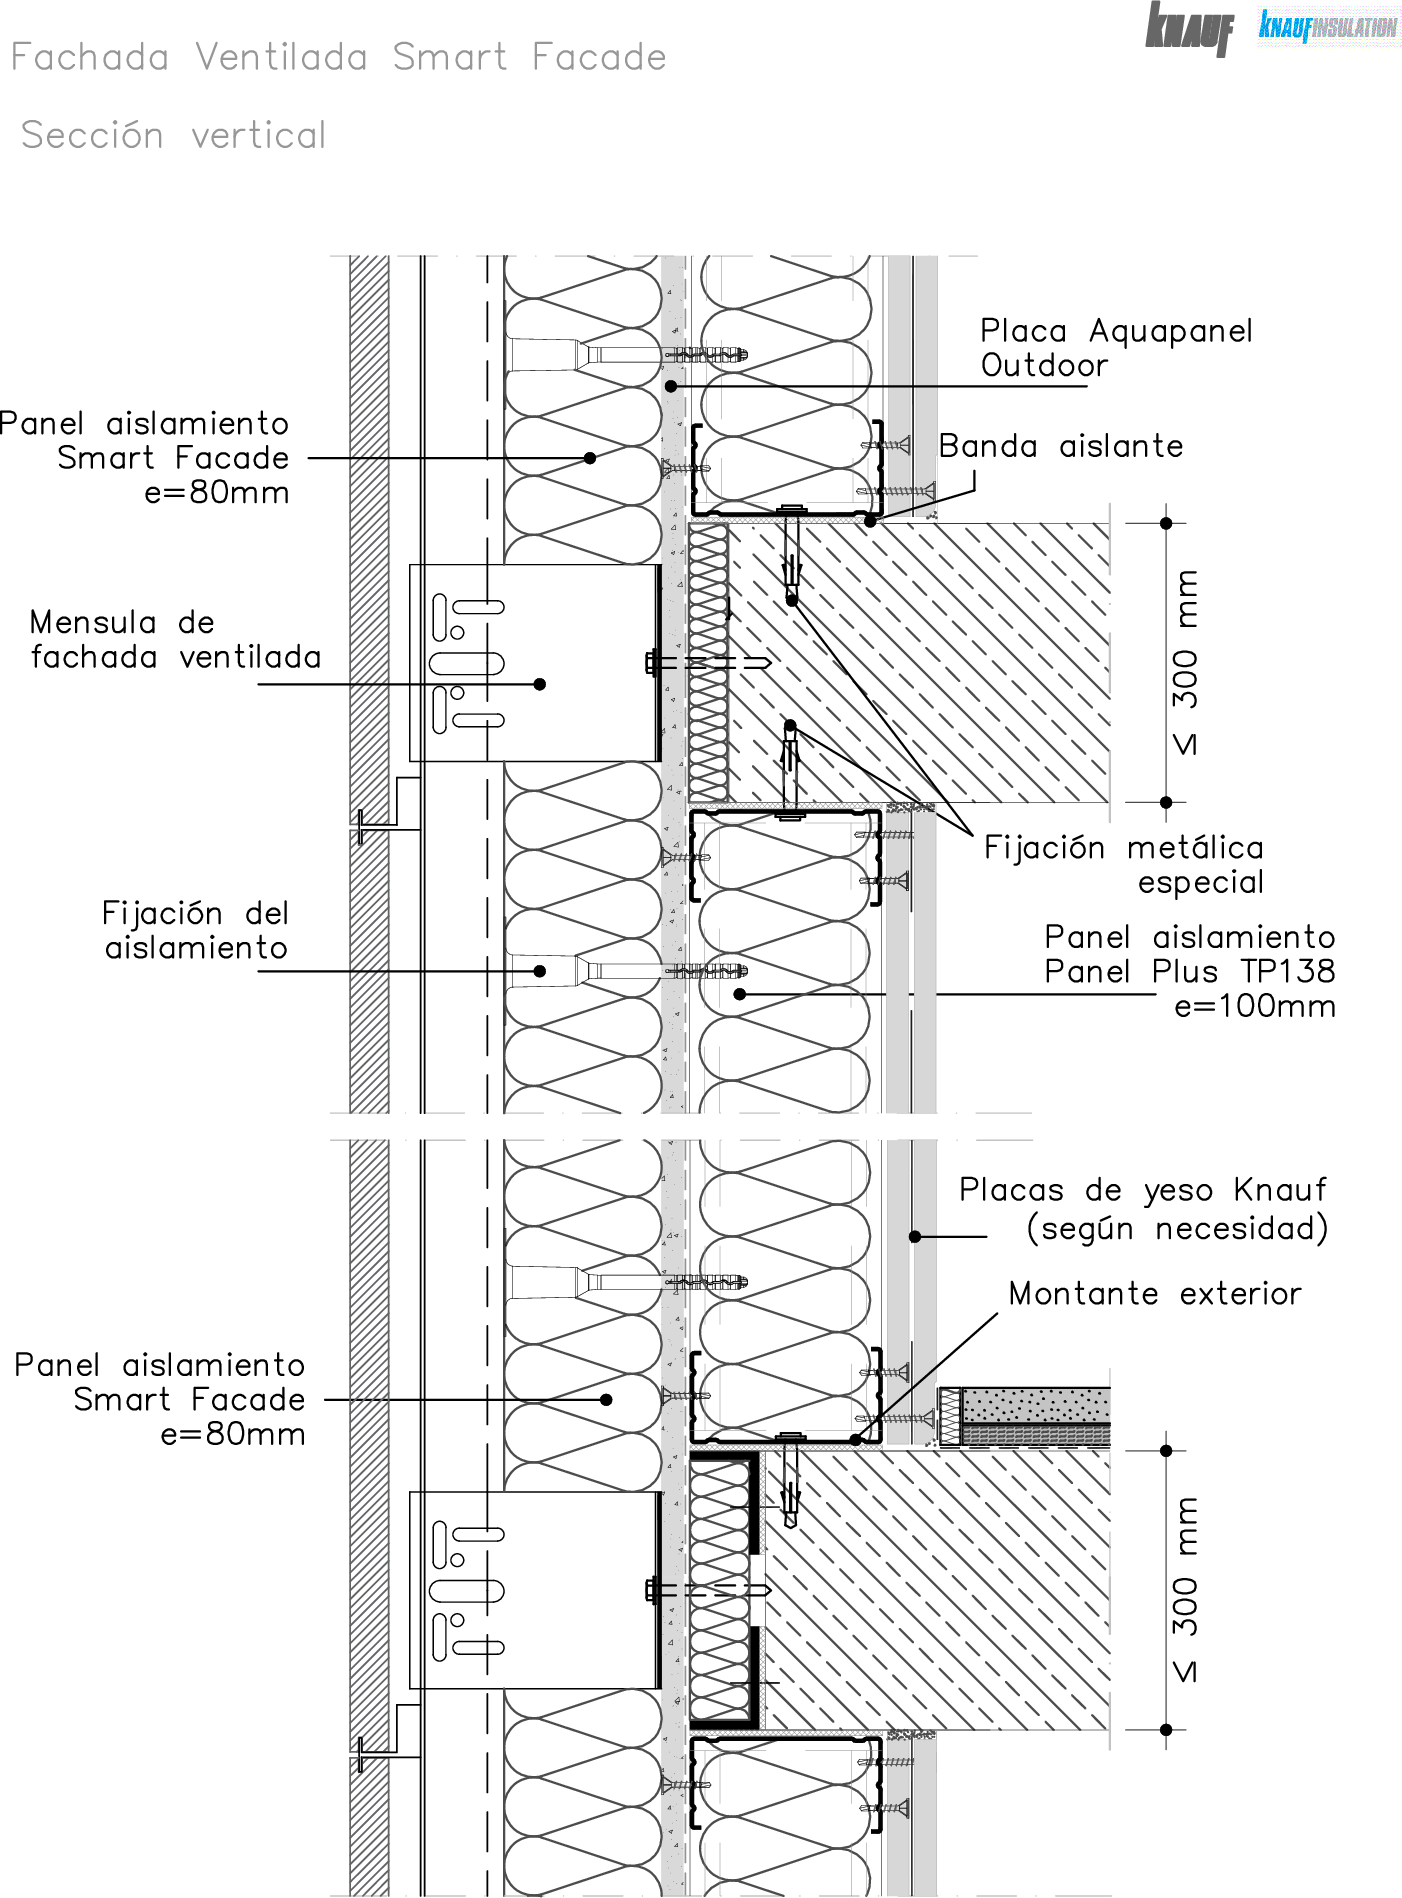 Fachada ligera ventilada Smart Facade - sección vertical